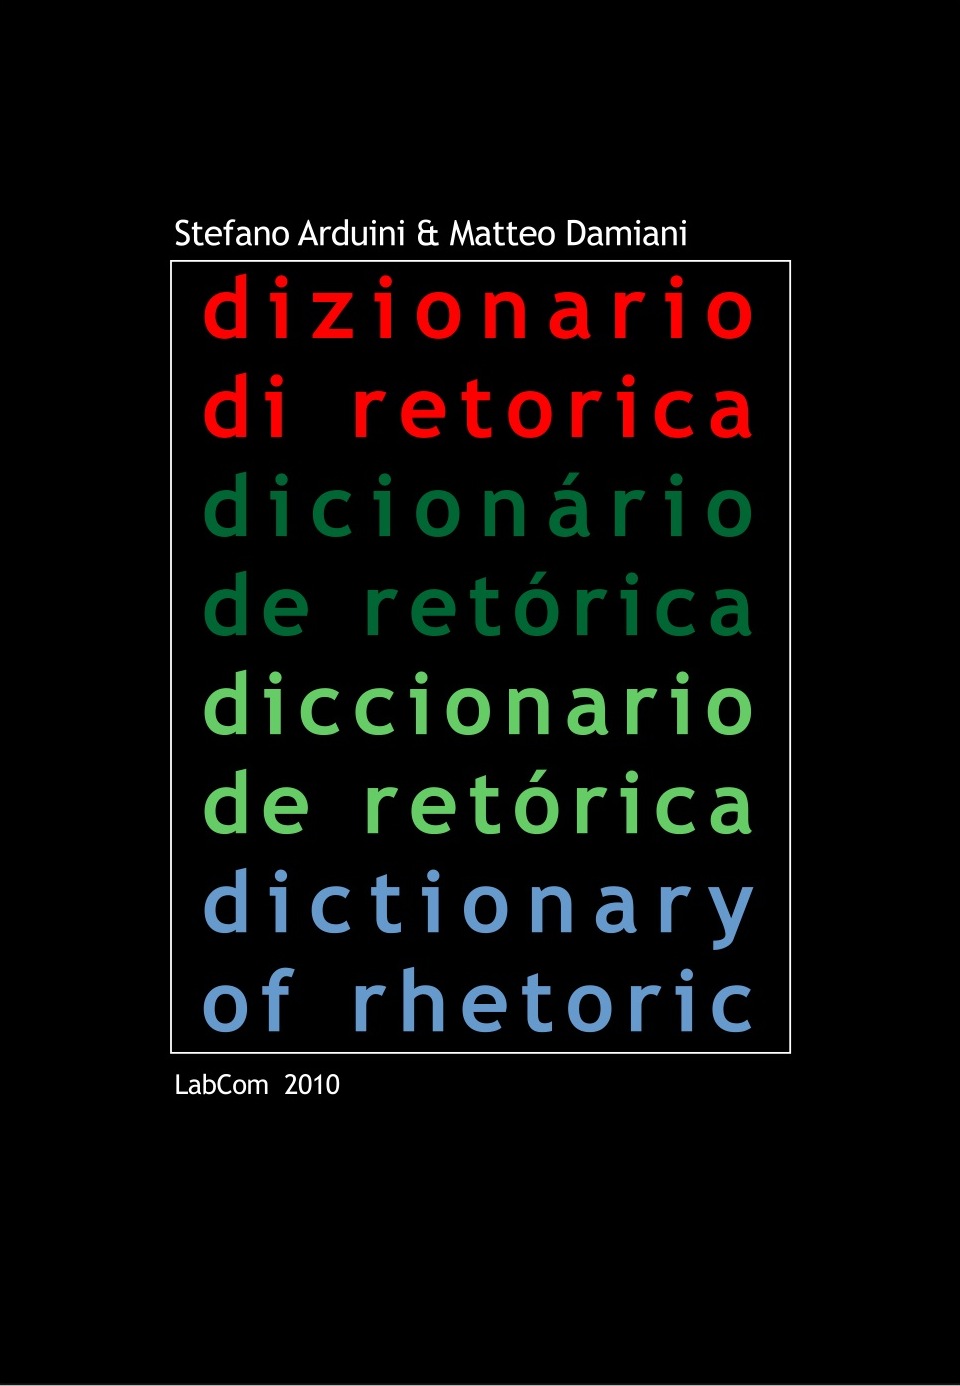 Capa: Stefano Arduini & Matteo Damiani (2010) Dizionario di retorica. Communication  +  Philosophy  +  Humanities. .